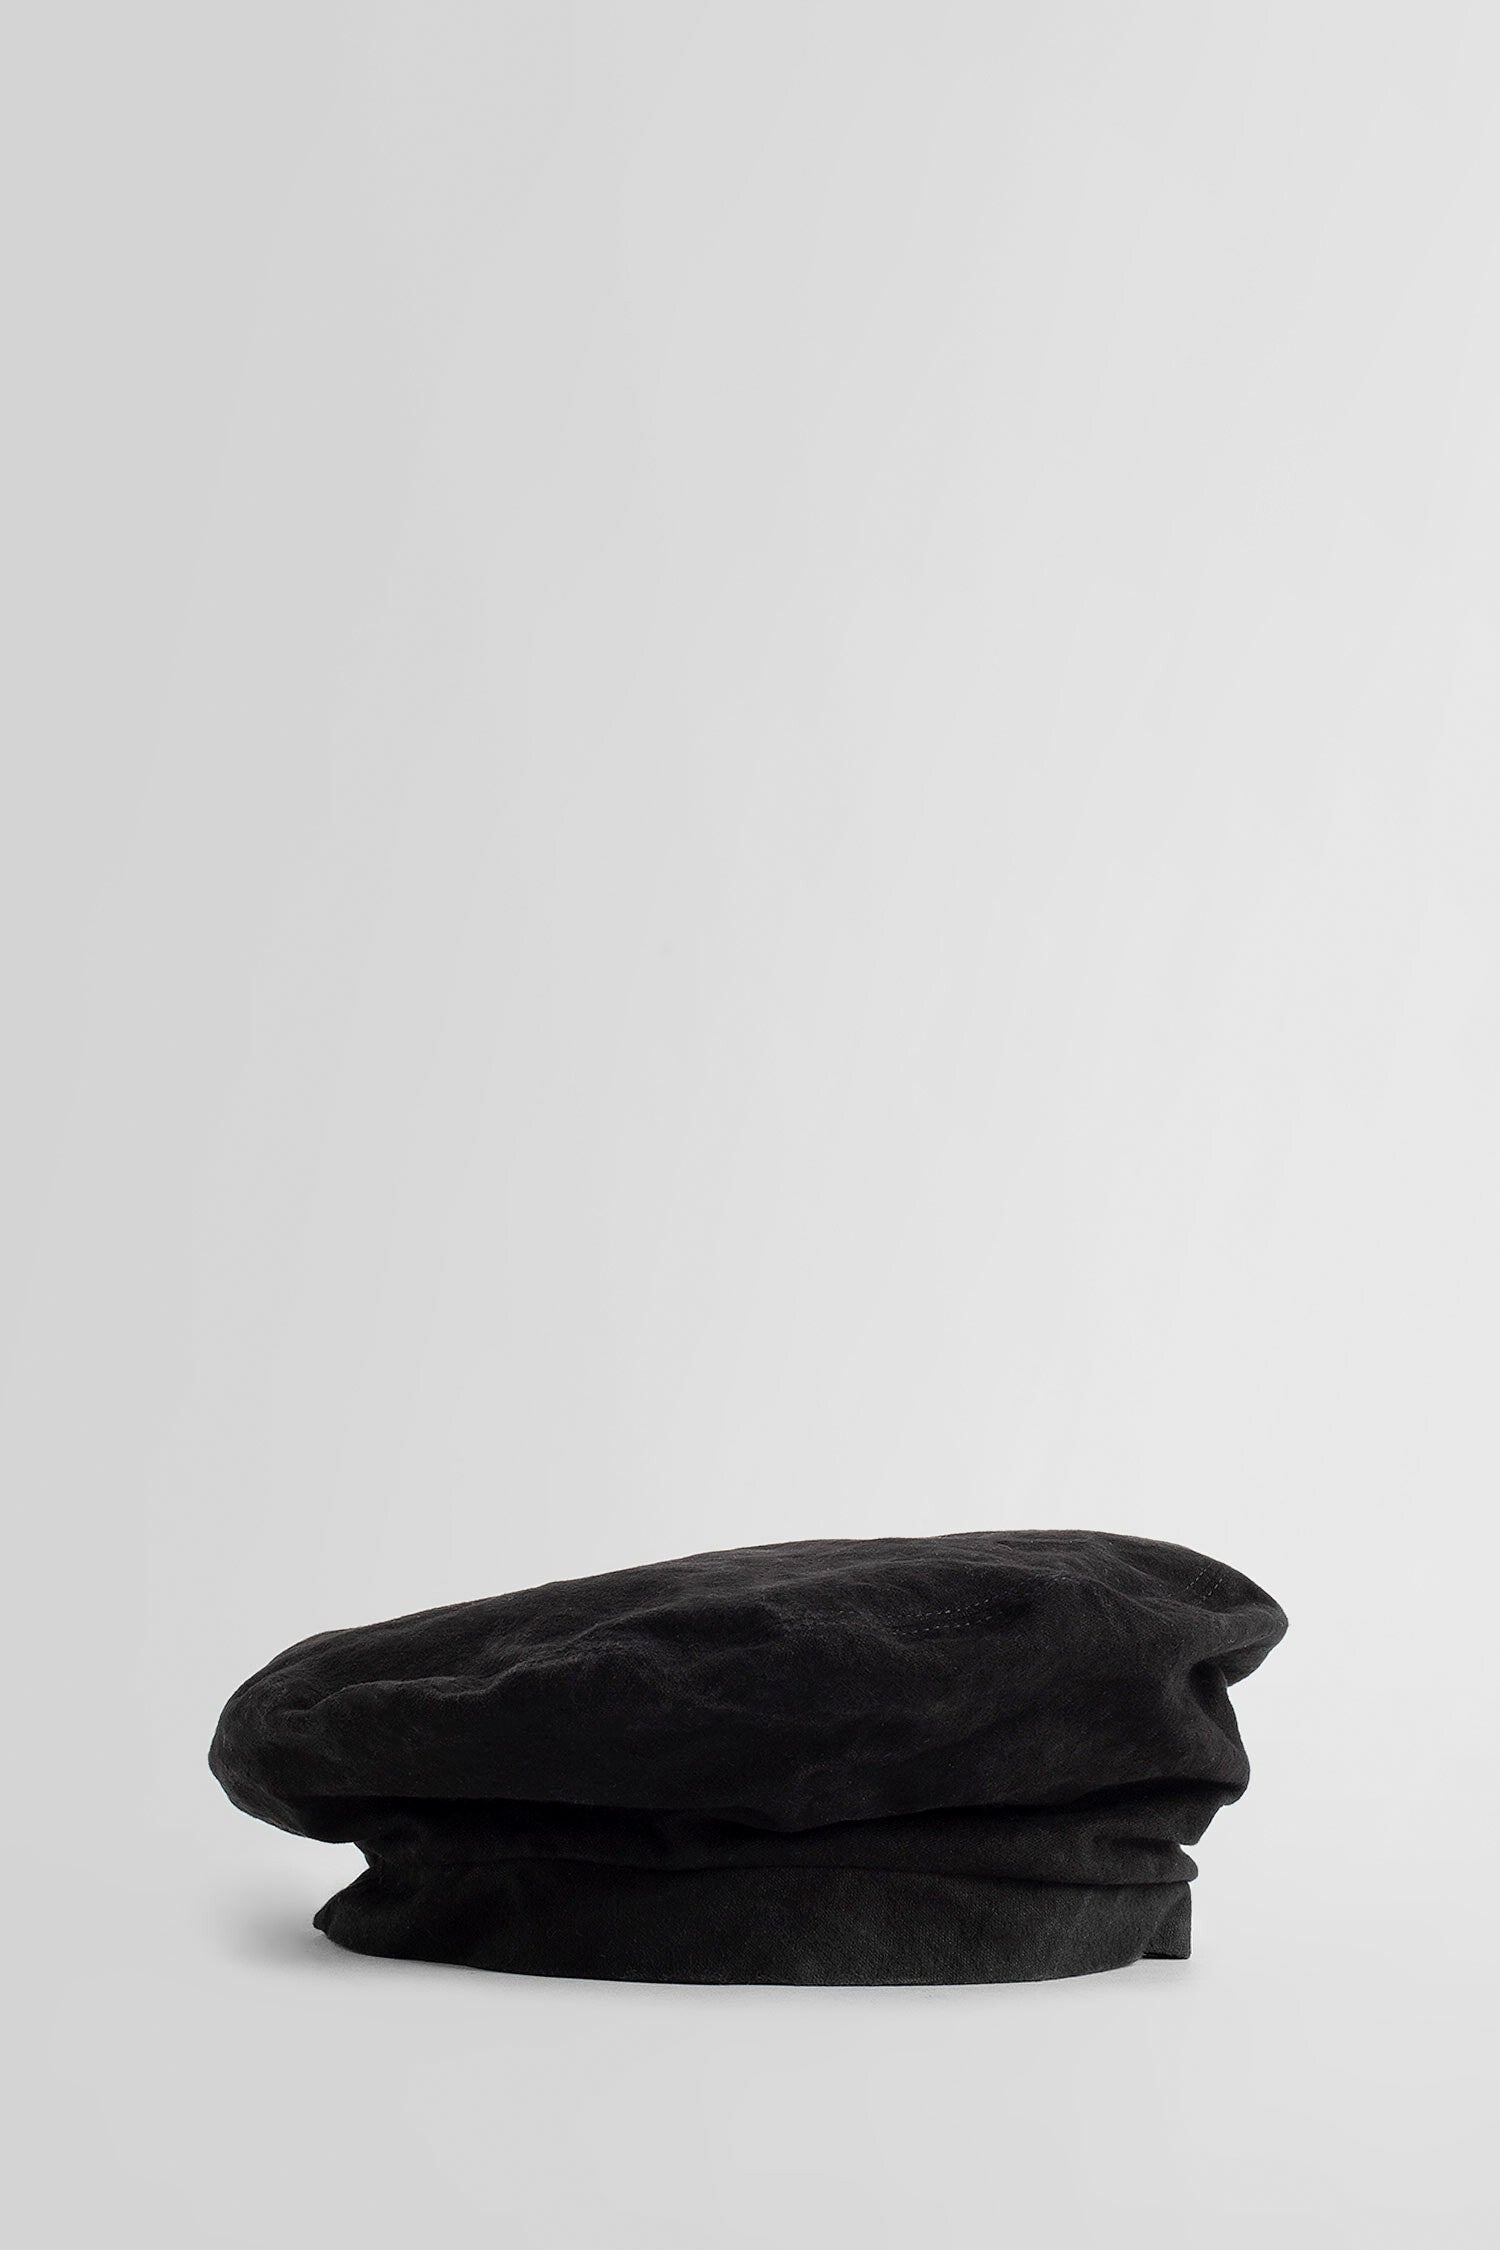 HORISAKI UNISEX BLACK HATS - 2